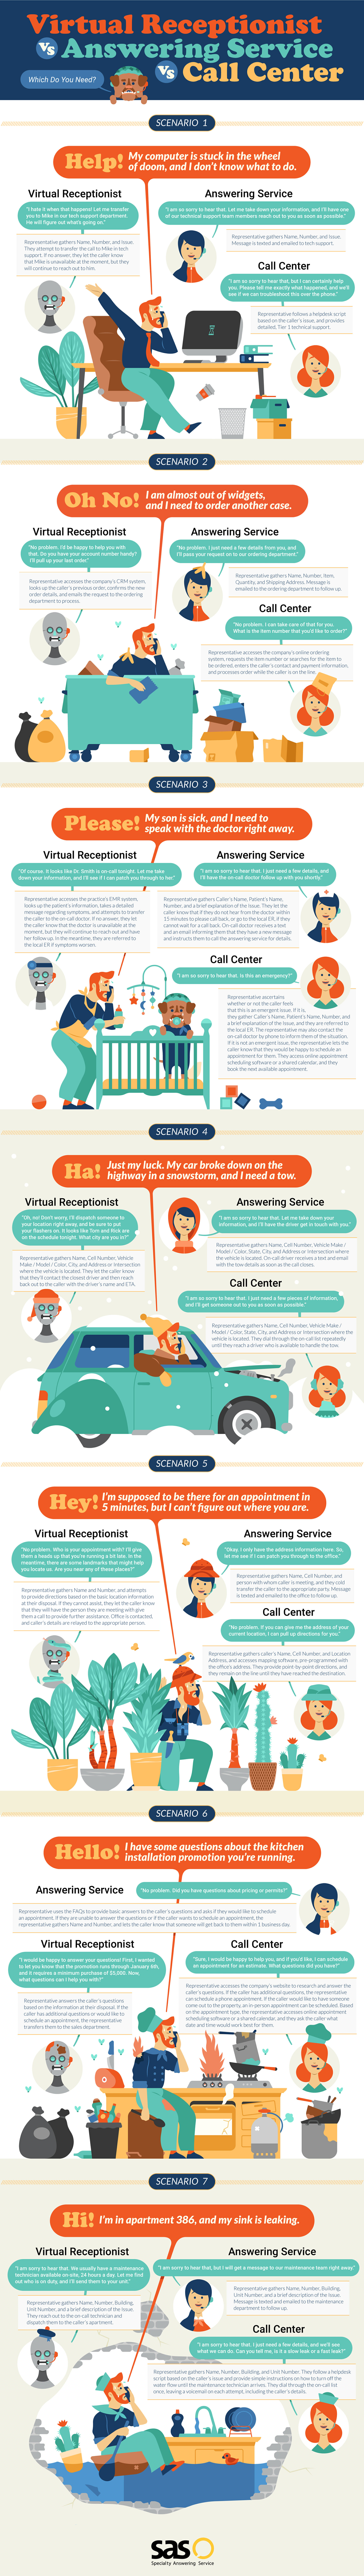 Answering Service vs Virtual Receptionist vs Call Center Infographic